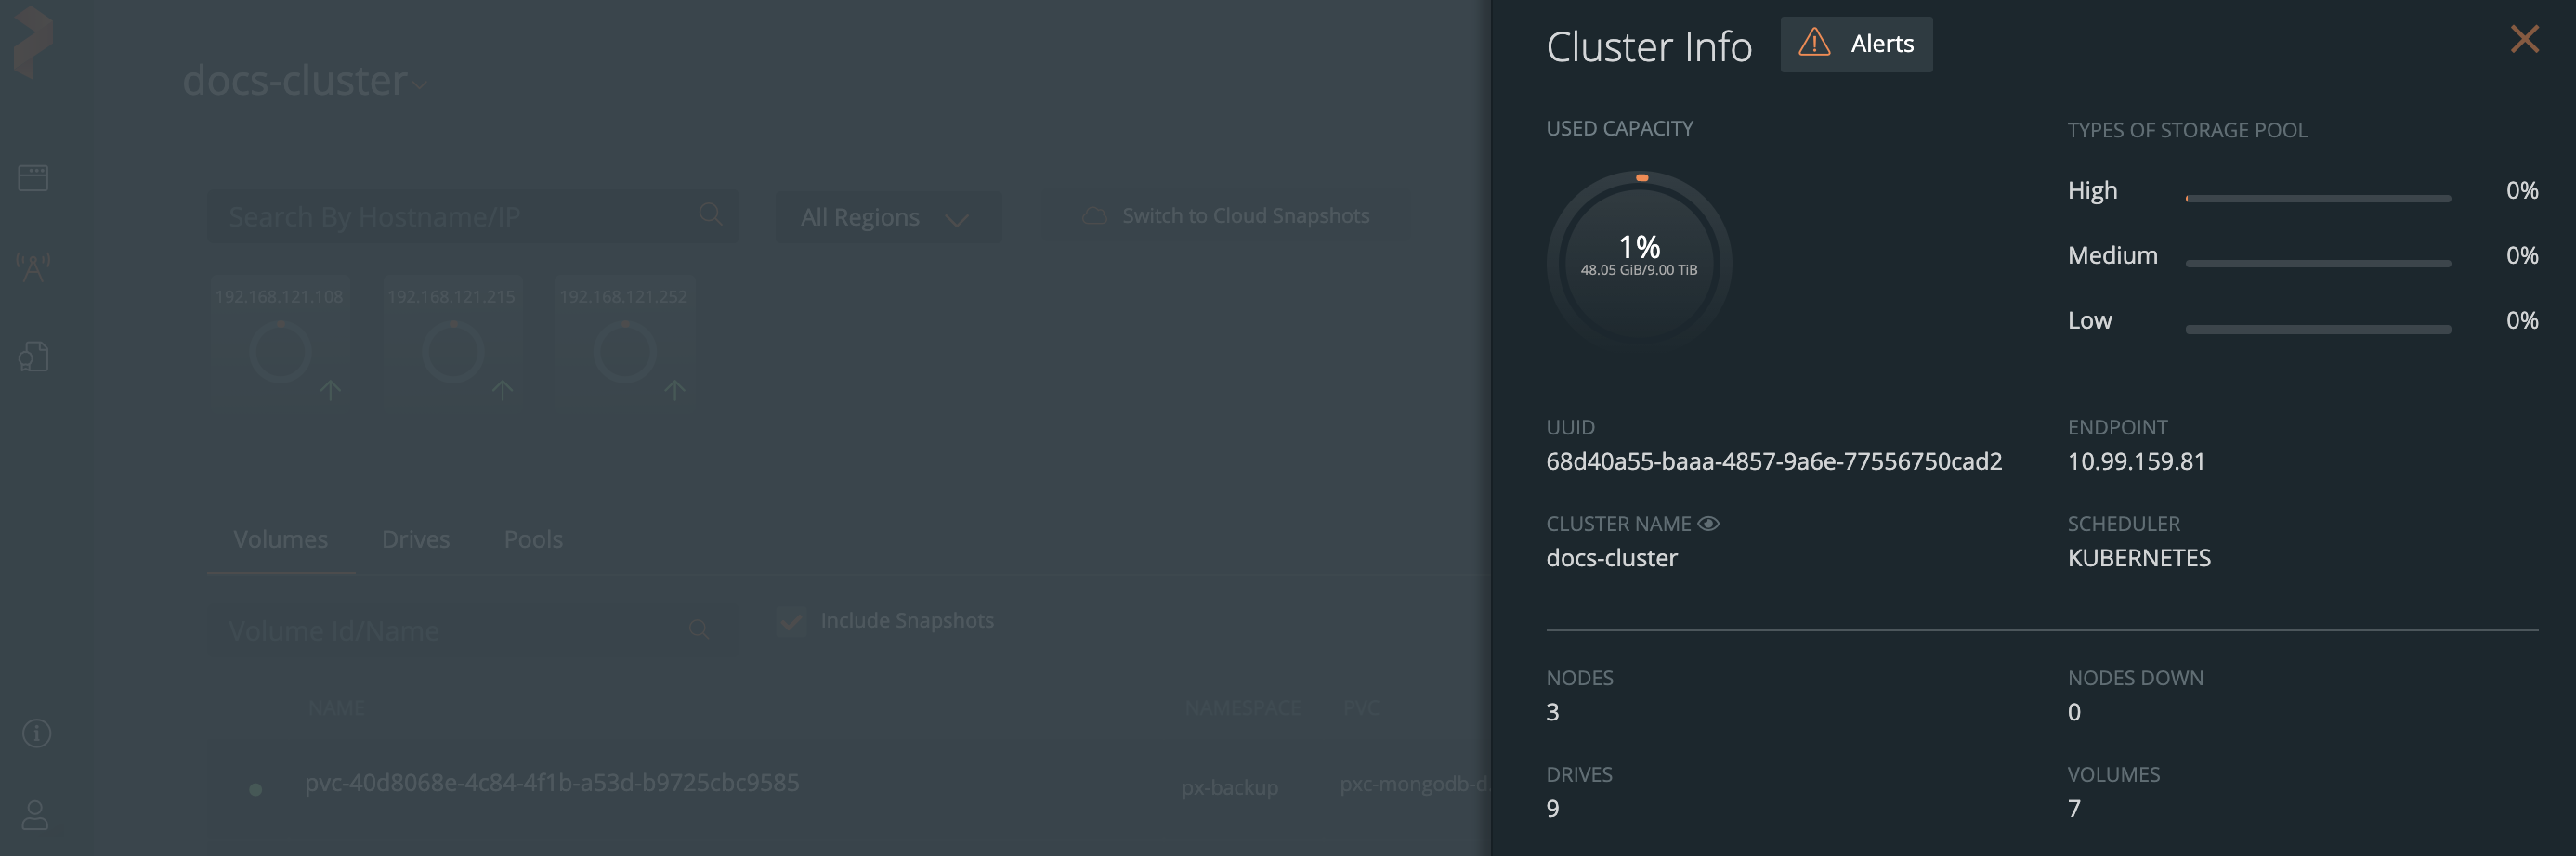 Cluster info window